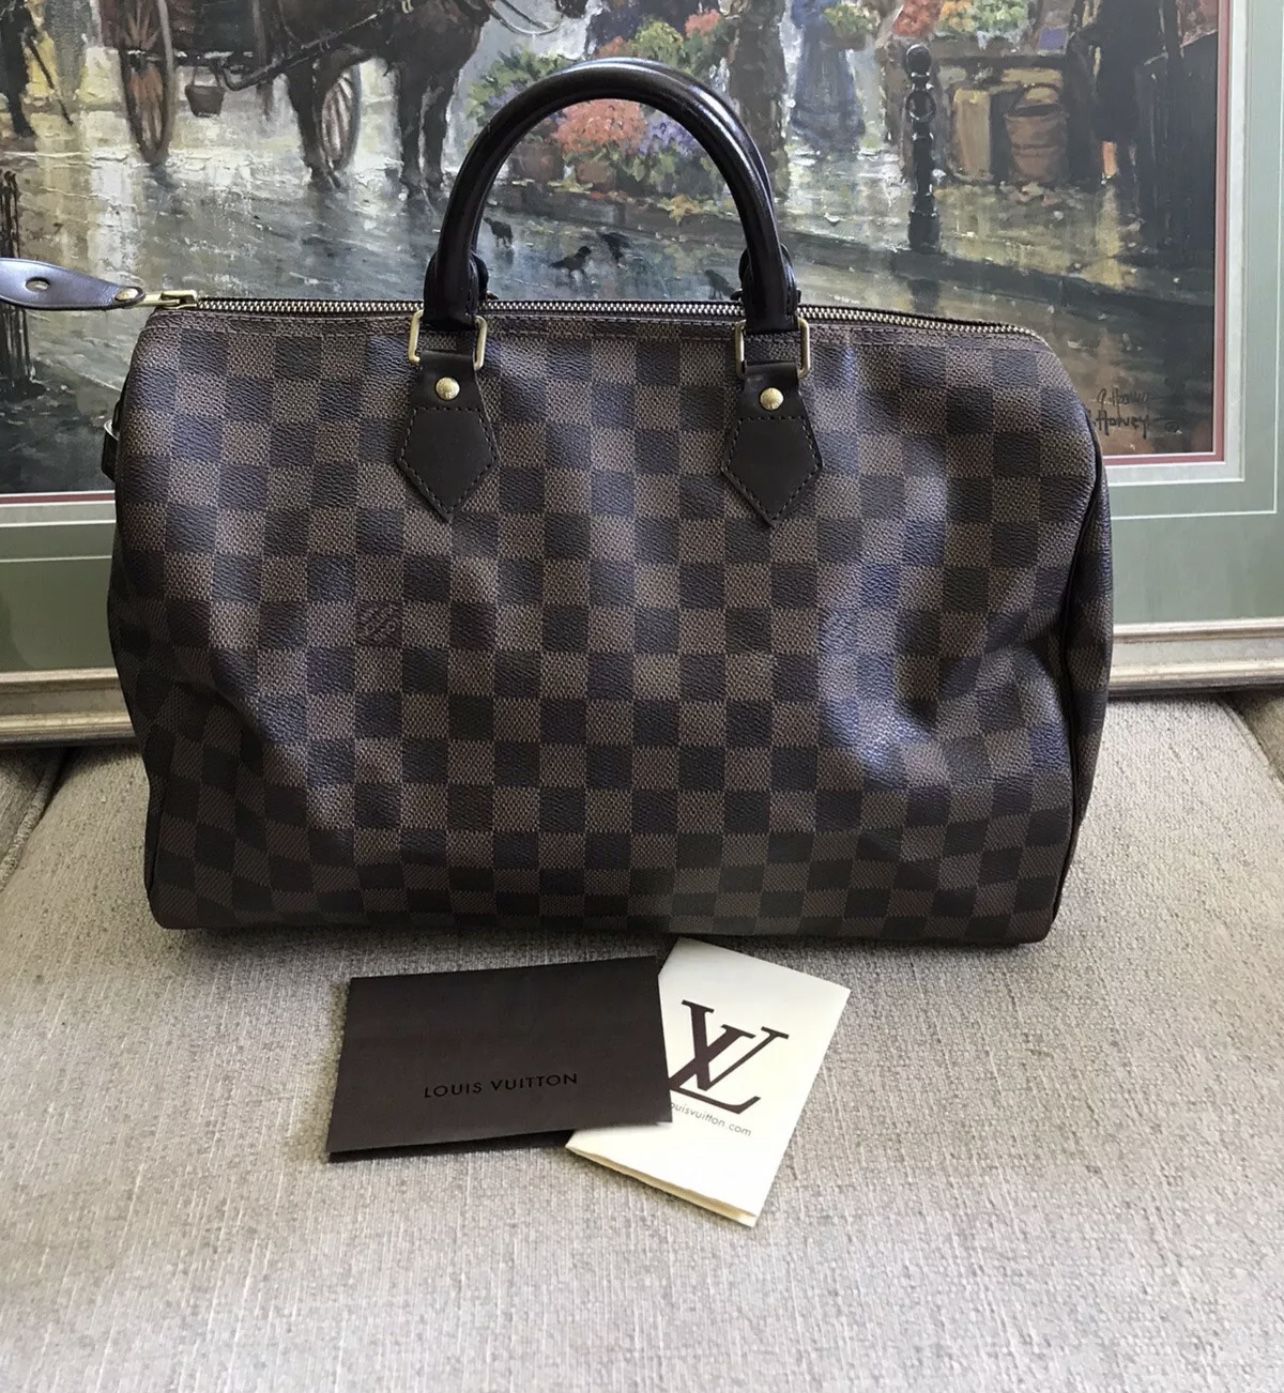 ❤ Louis Vuitton Speedy 35 Damier Ebene Handbag With Receipt 100 Percent Authentic 